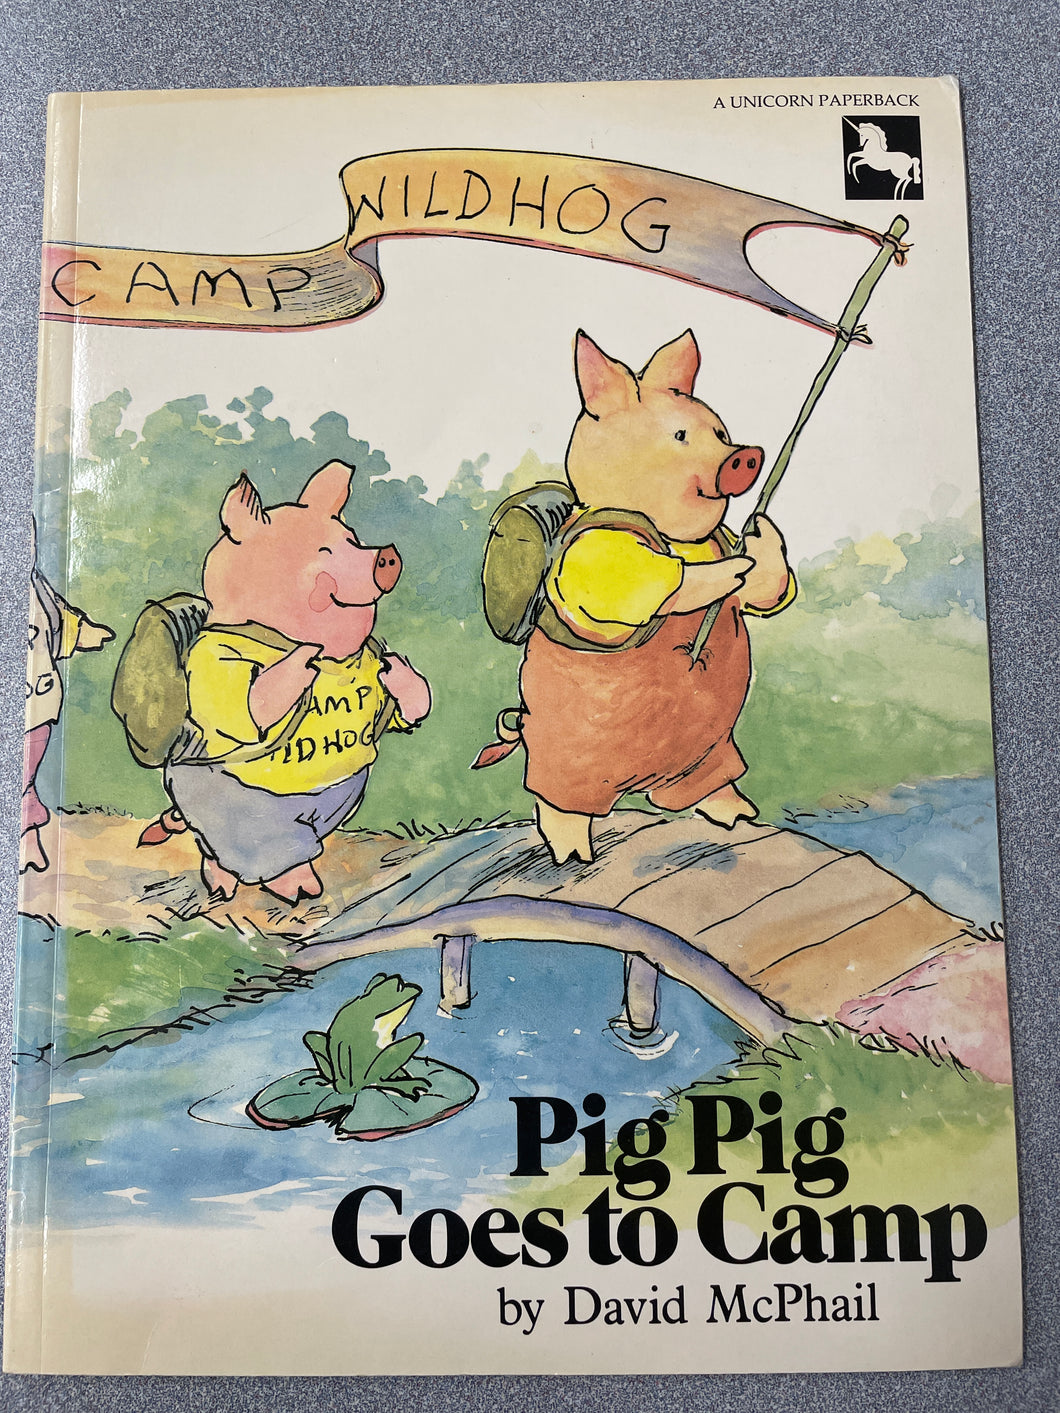 McPhail, David, Pig Pig Goes to Camp, [1983] CP 2/24